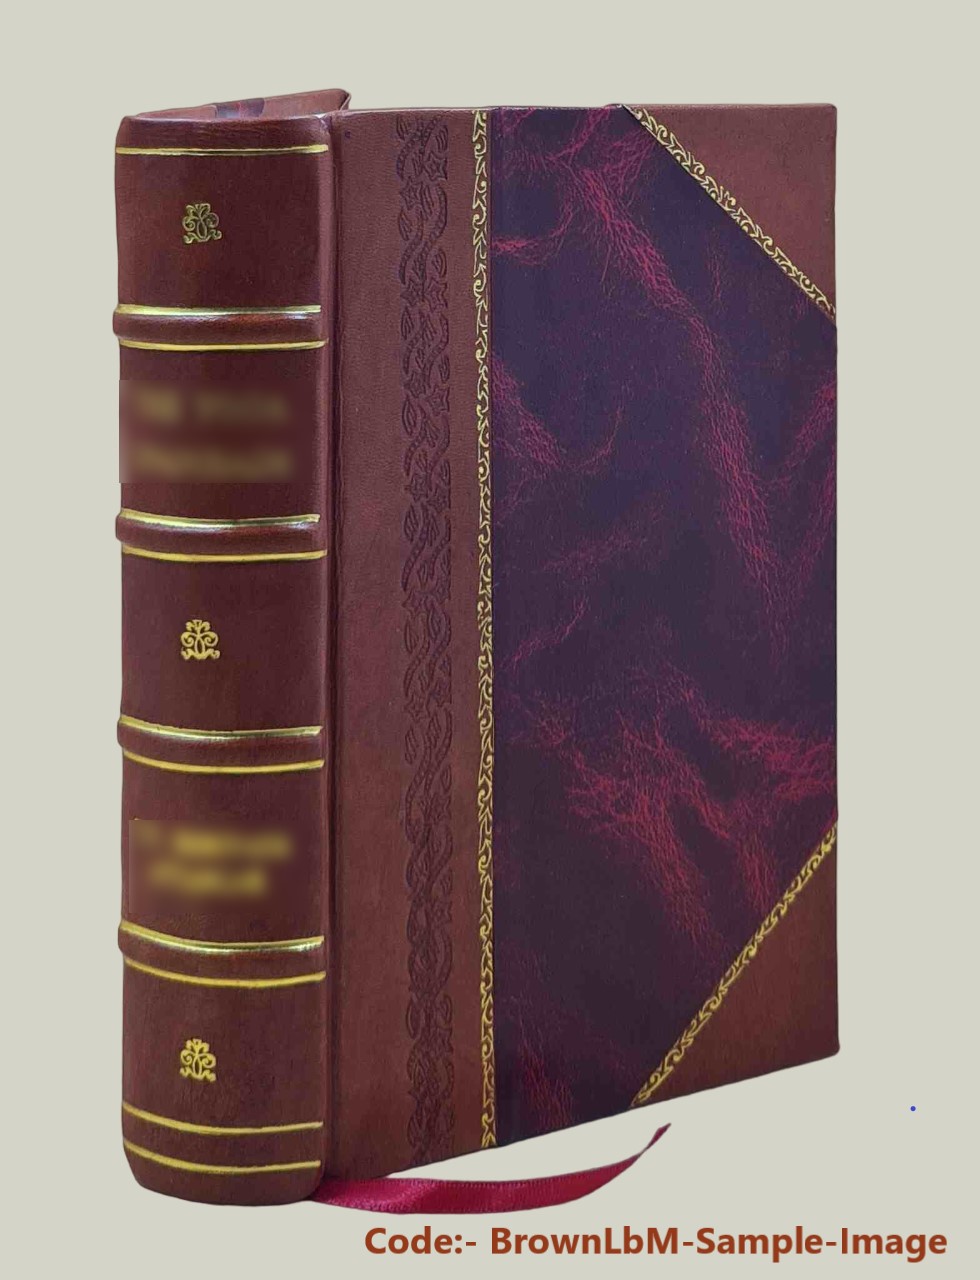 Insula sanctorum et doctorum : or Ireland's ancient schools and scholars / by John Healy. 1890 [Leather Bound] - Healy John Archbishop -.